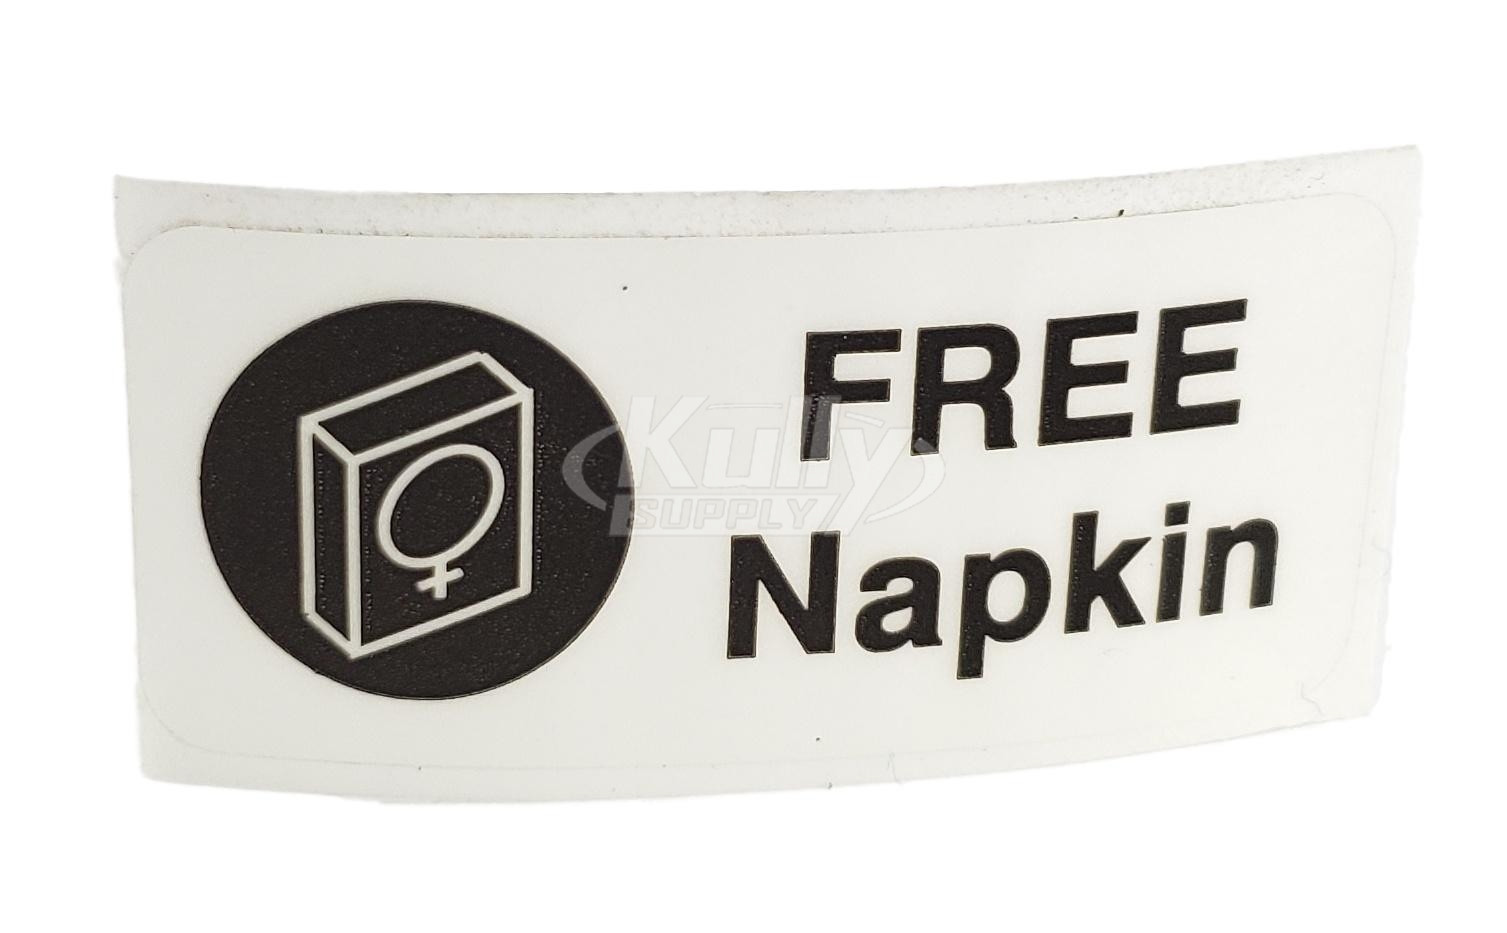 Free Napkin Sticker